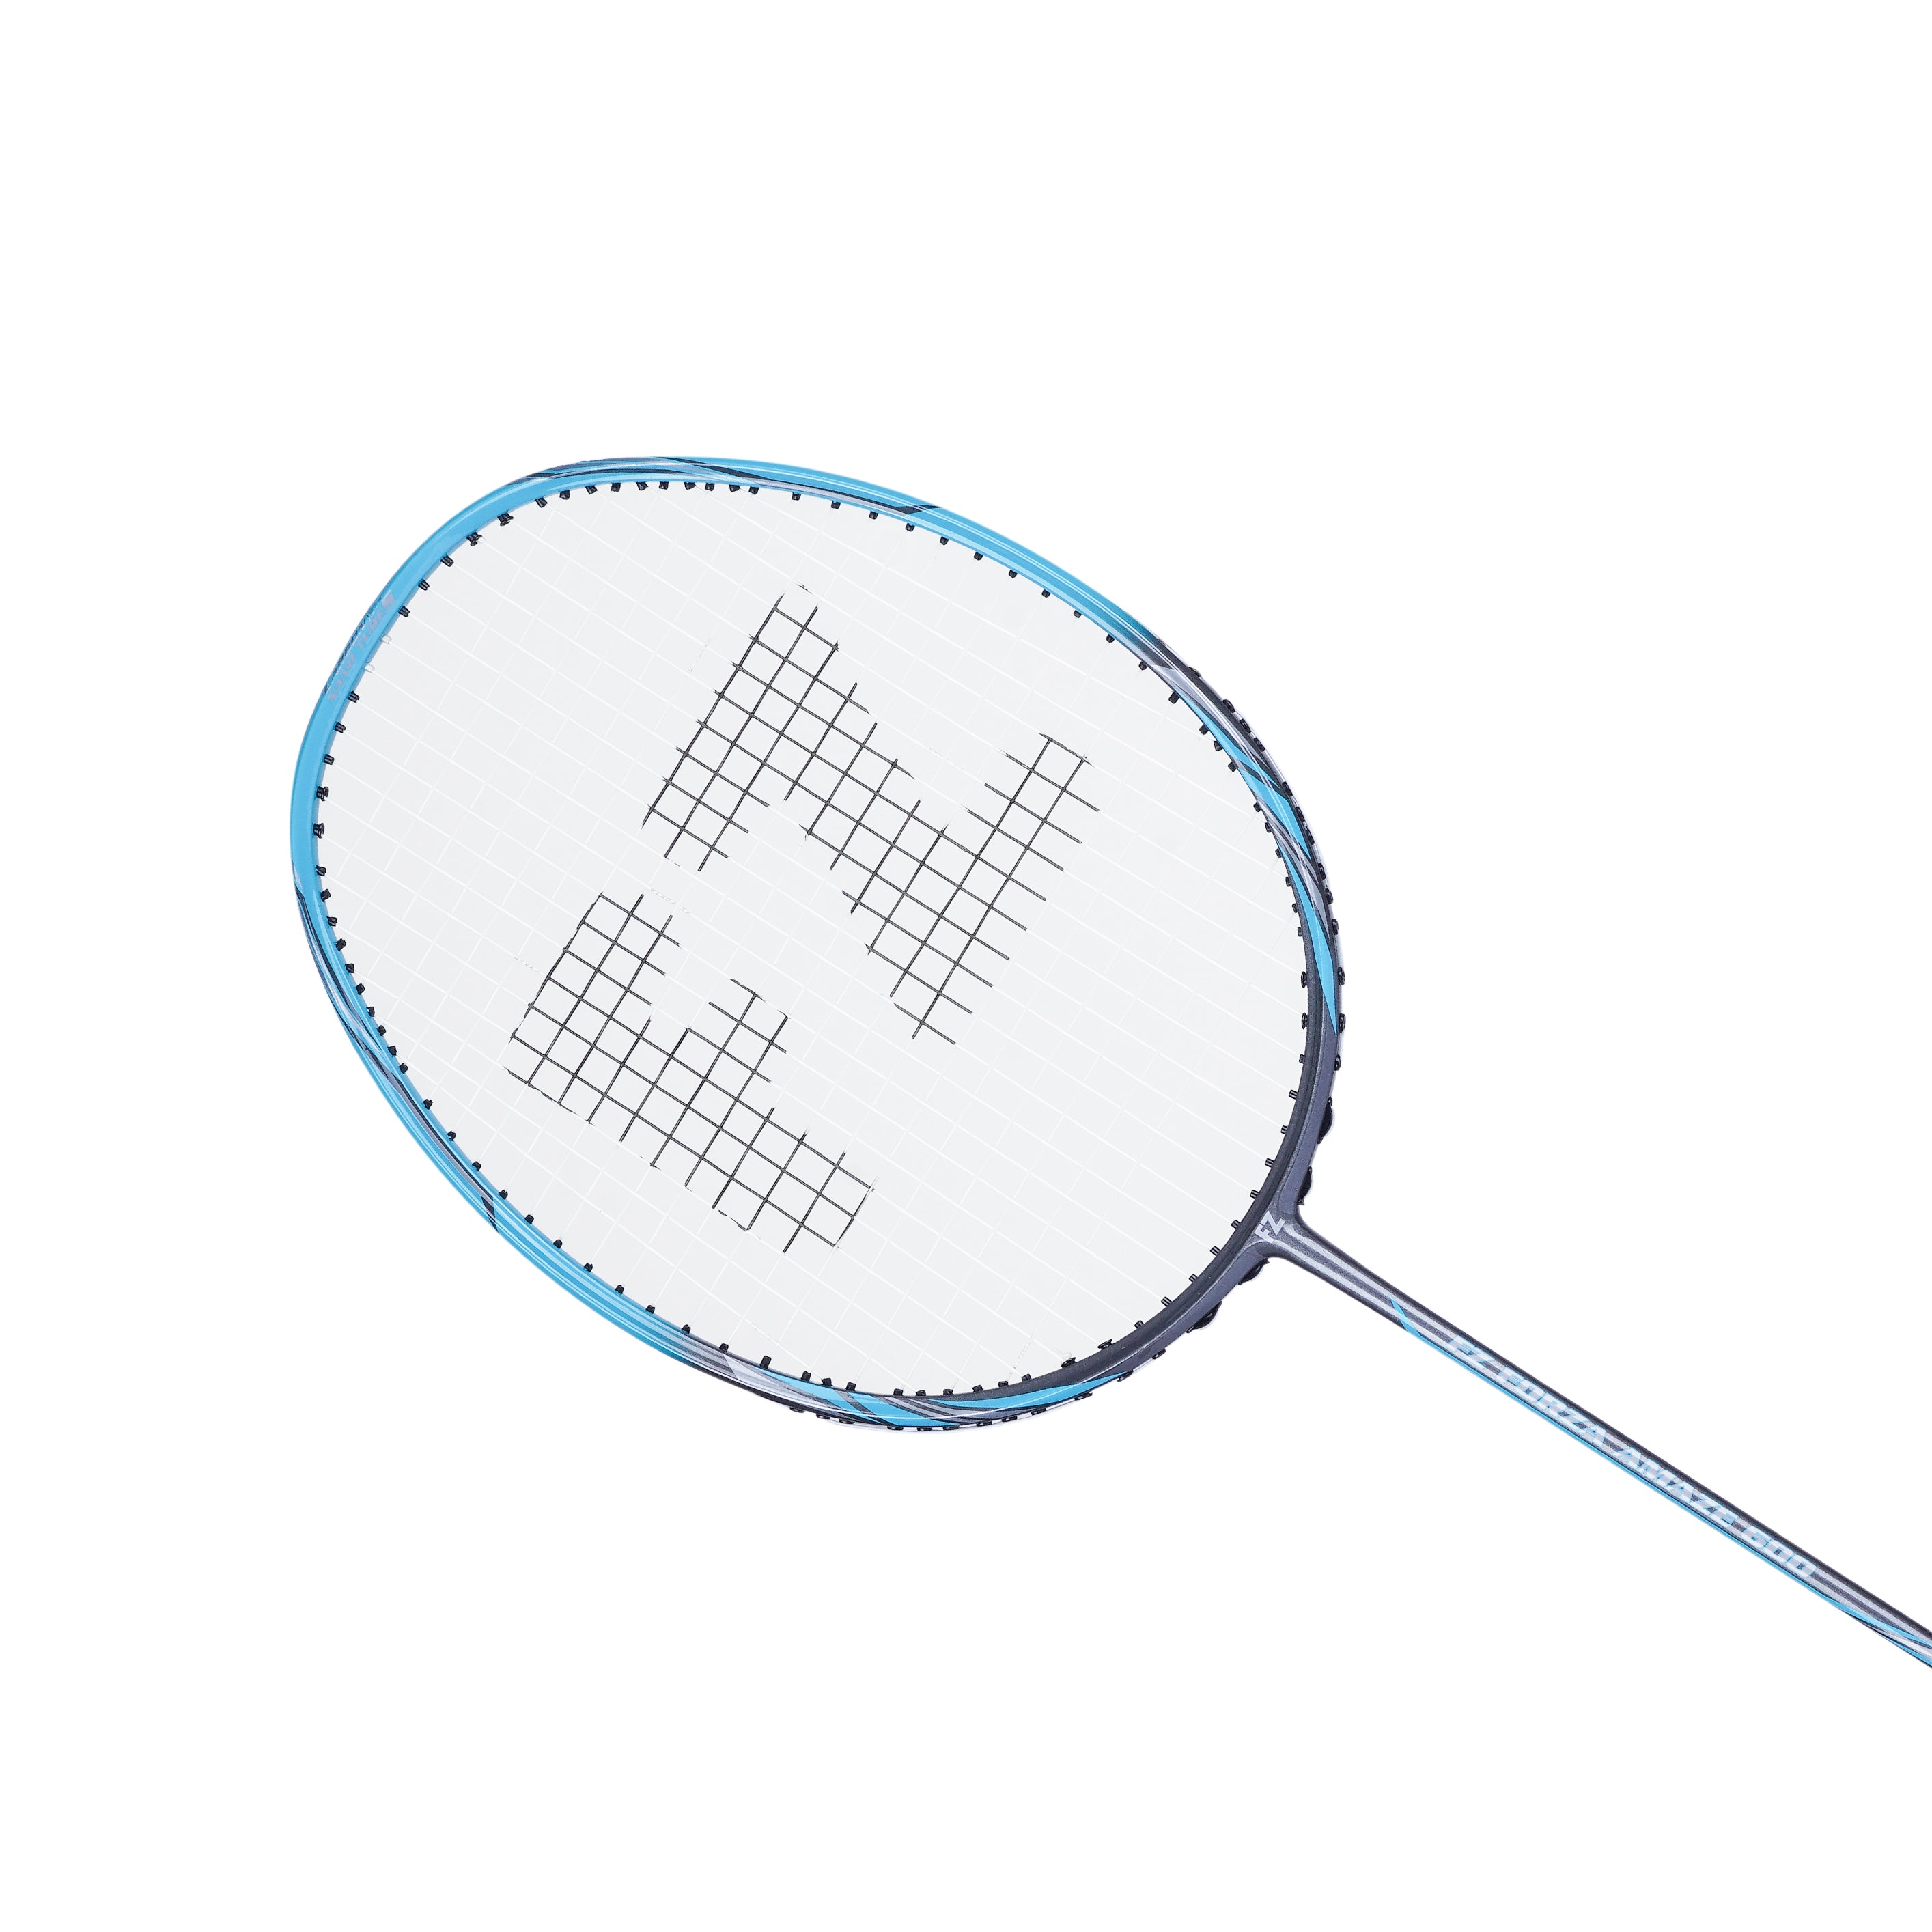 Amaze 600 Strung Badminton Racket - Scuba Blue